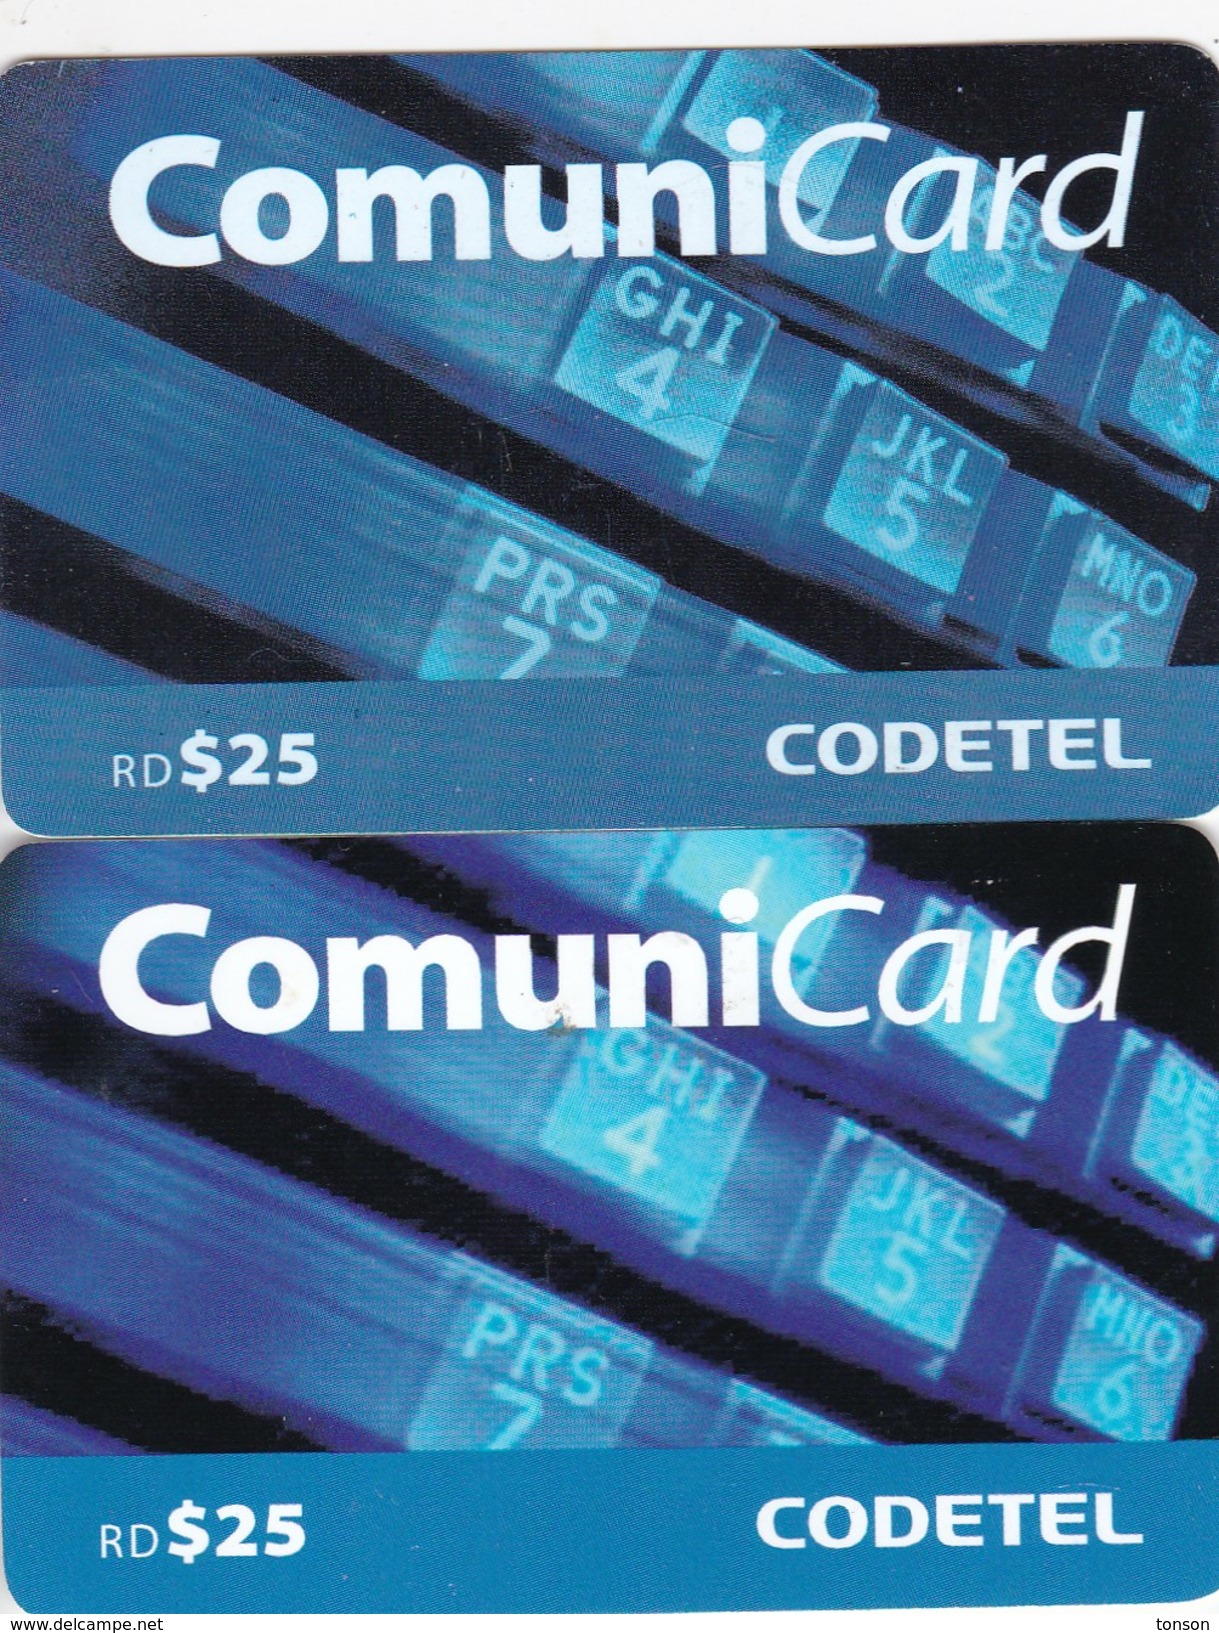 Dominican Republic, RD$25, ComuniCard, 2 Cards, Glossy And Matt, 2 Scans. - Dominik. Republik